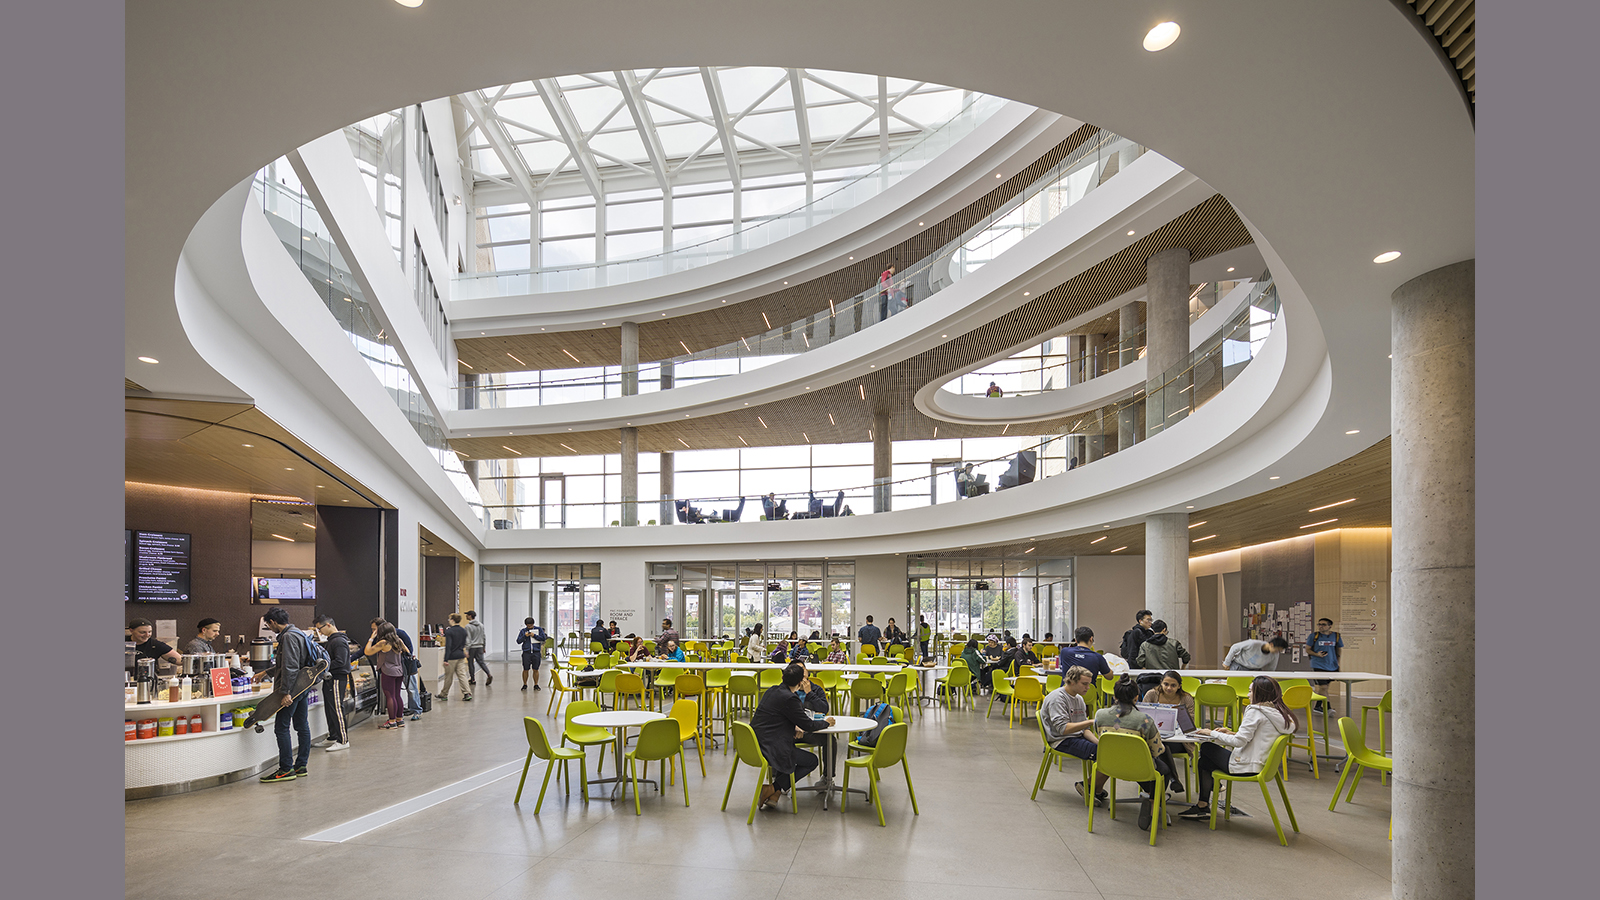 Tepper School of Business at Carnegie Mellon University, dining area in atrium